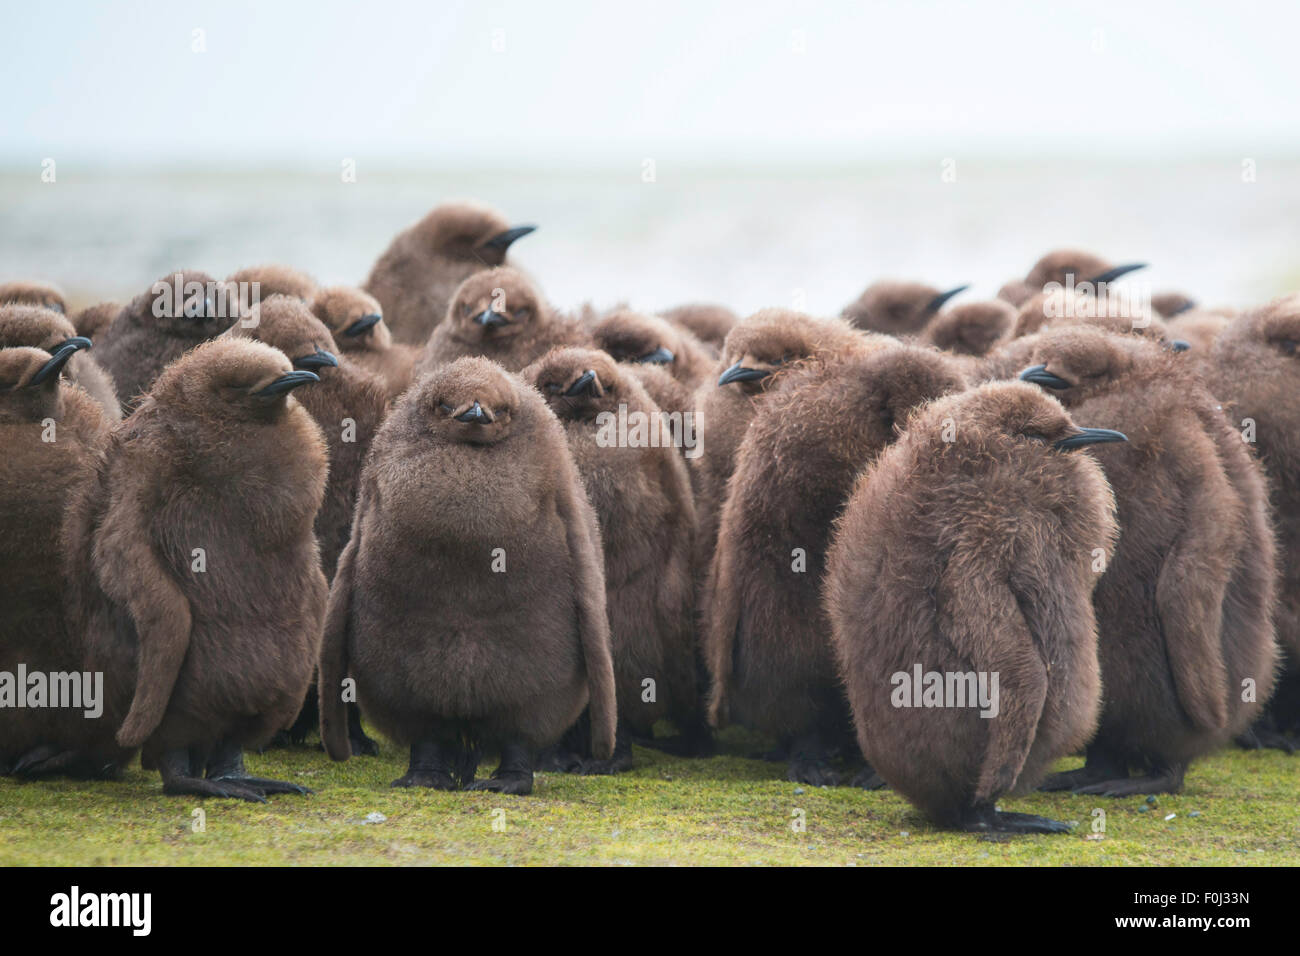 King Penguin (Aptenodytes patagonicus) Creche of large brown chicks. Stock Photo